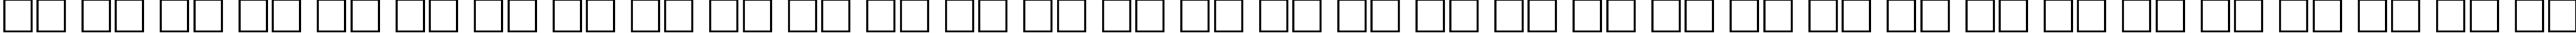 Пример написания русского алфавита шрифтом Aardvark80n